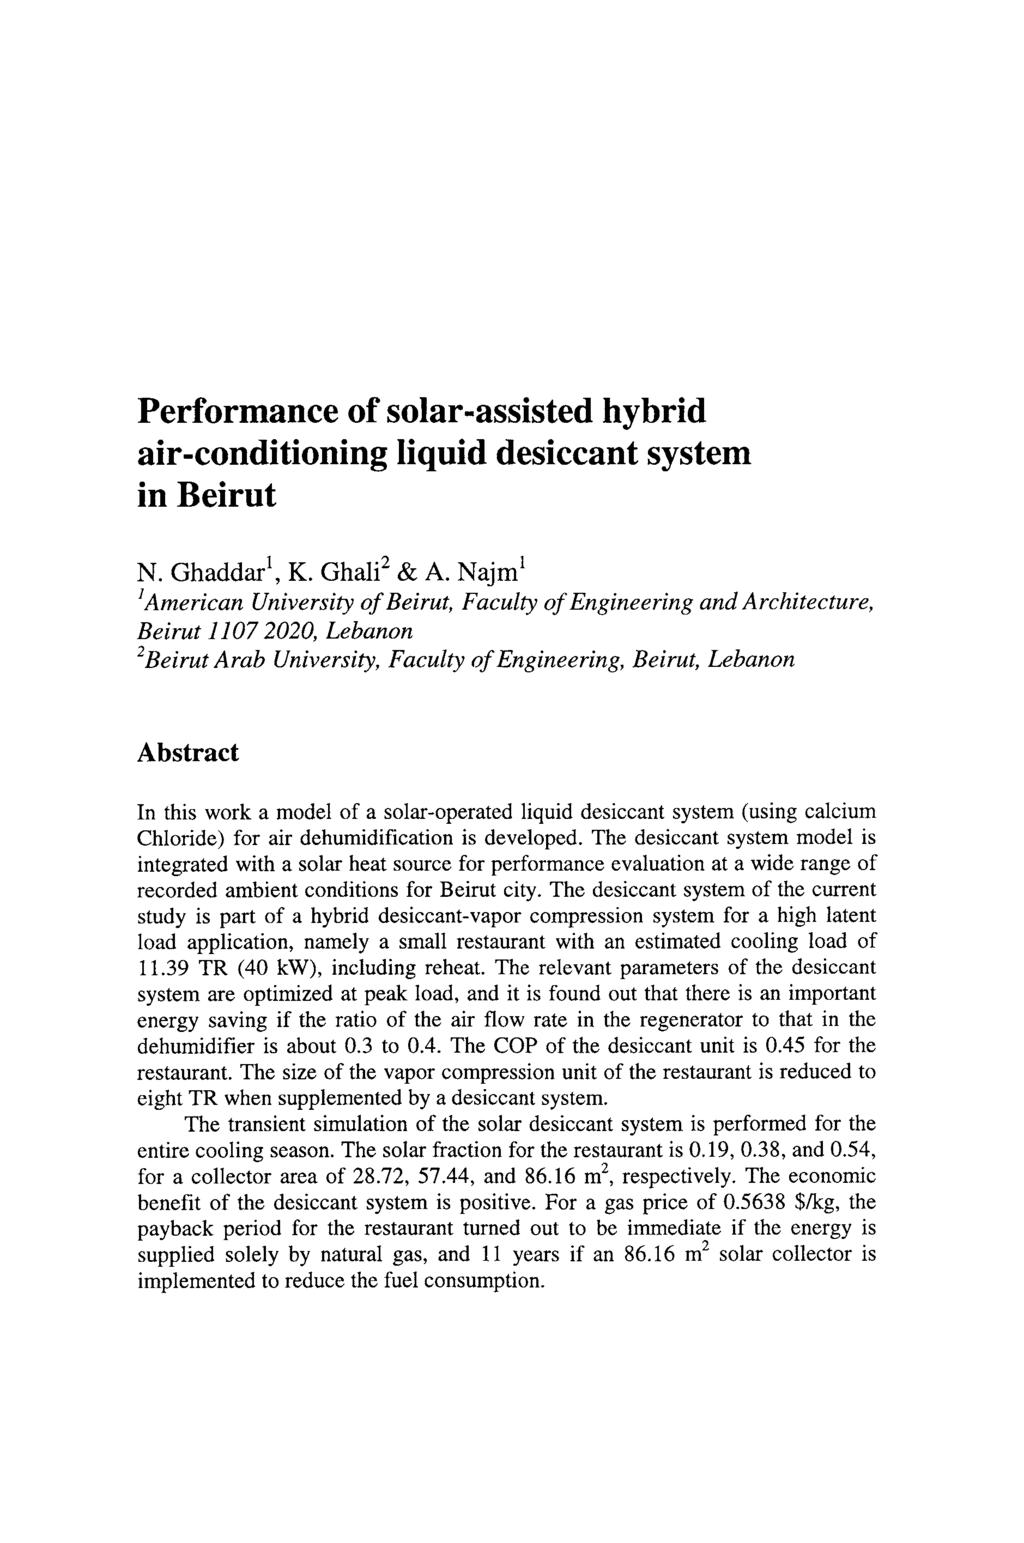 Performance of solar-assisted hybrid air-conditioning liquid desiccant system in Beirut N. Ghaddarl, K. Ghali2 & A.